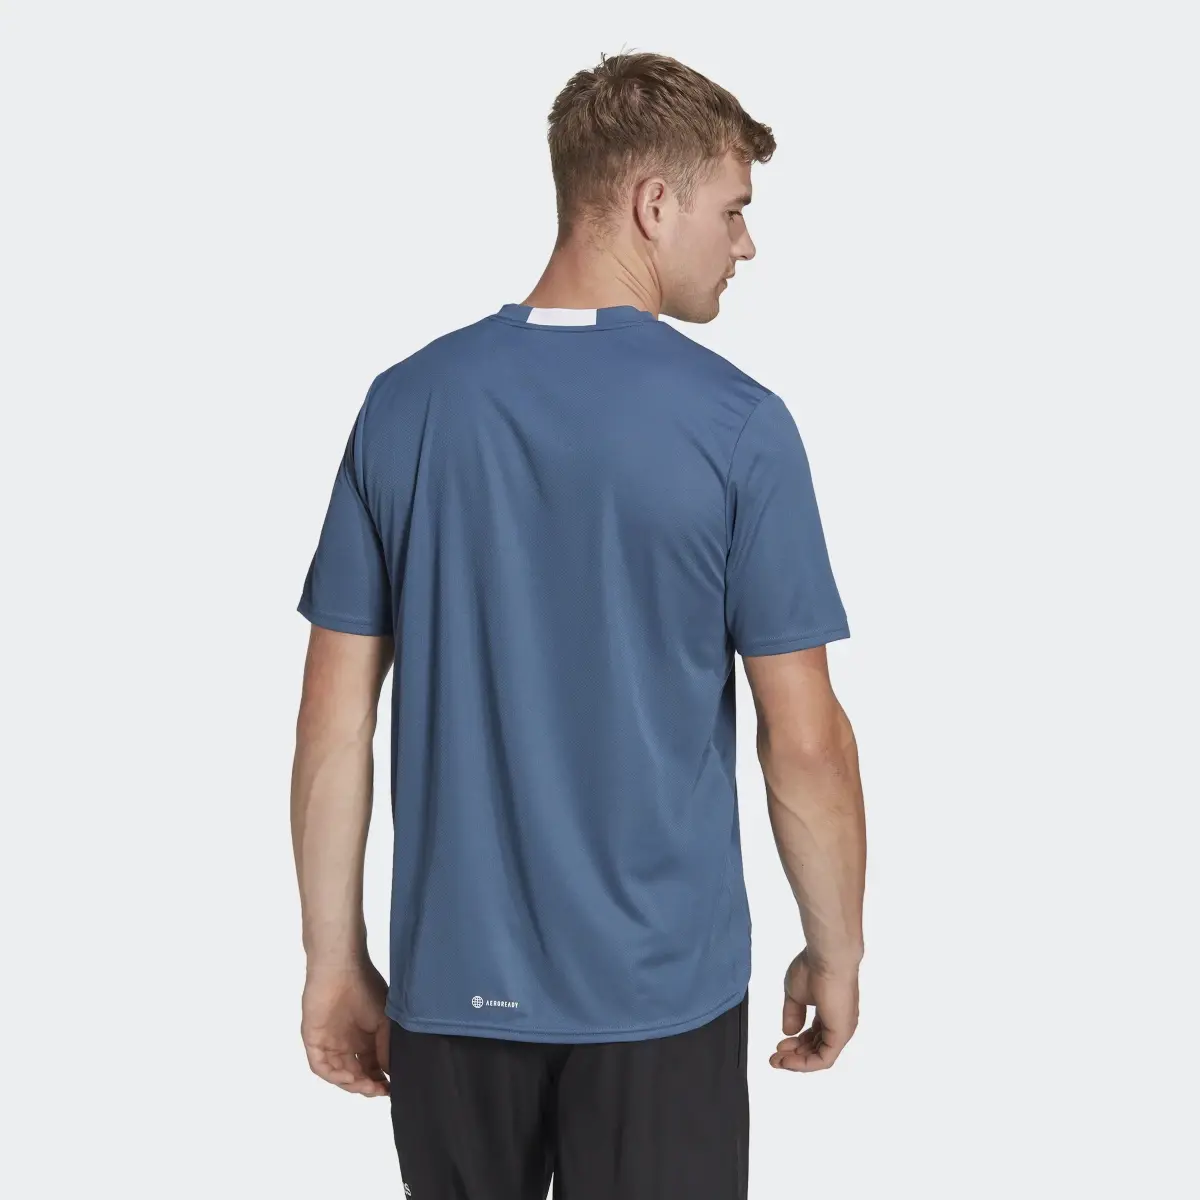 Adidas T-shirt AEROREADY Designed for Movement. 3